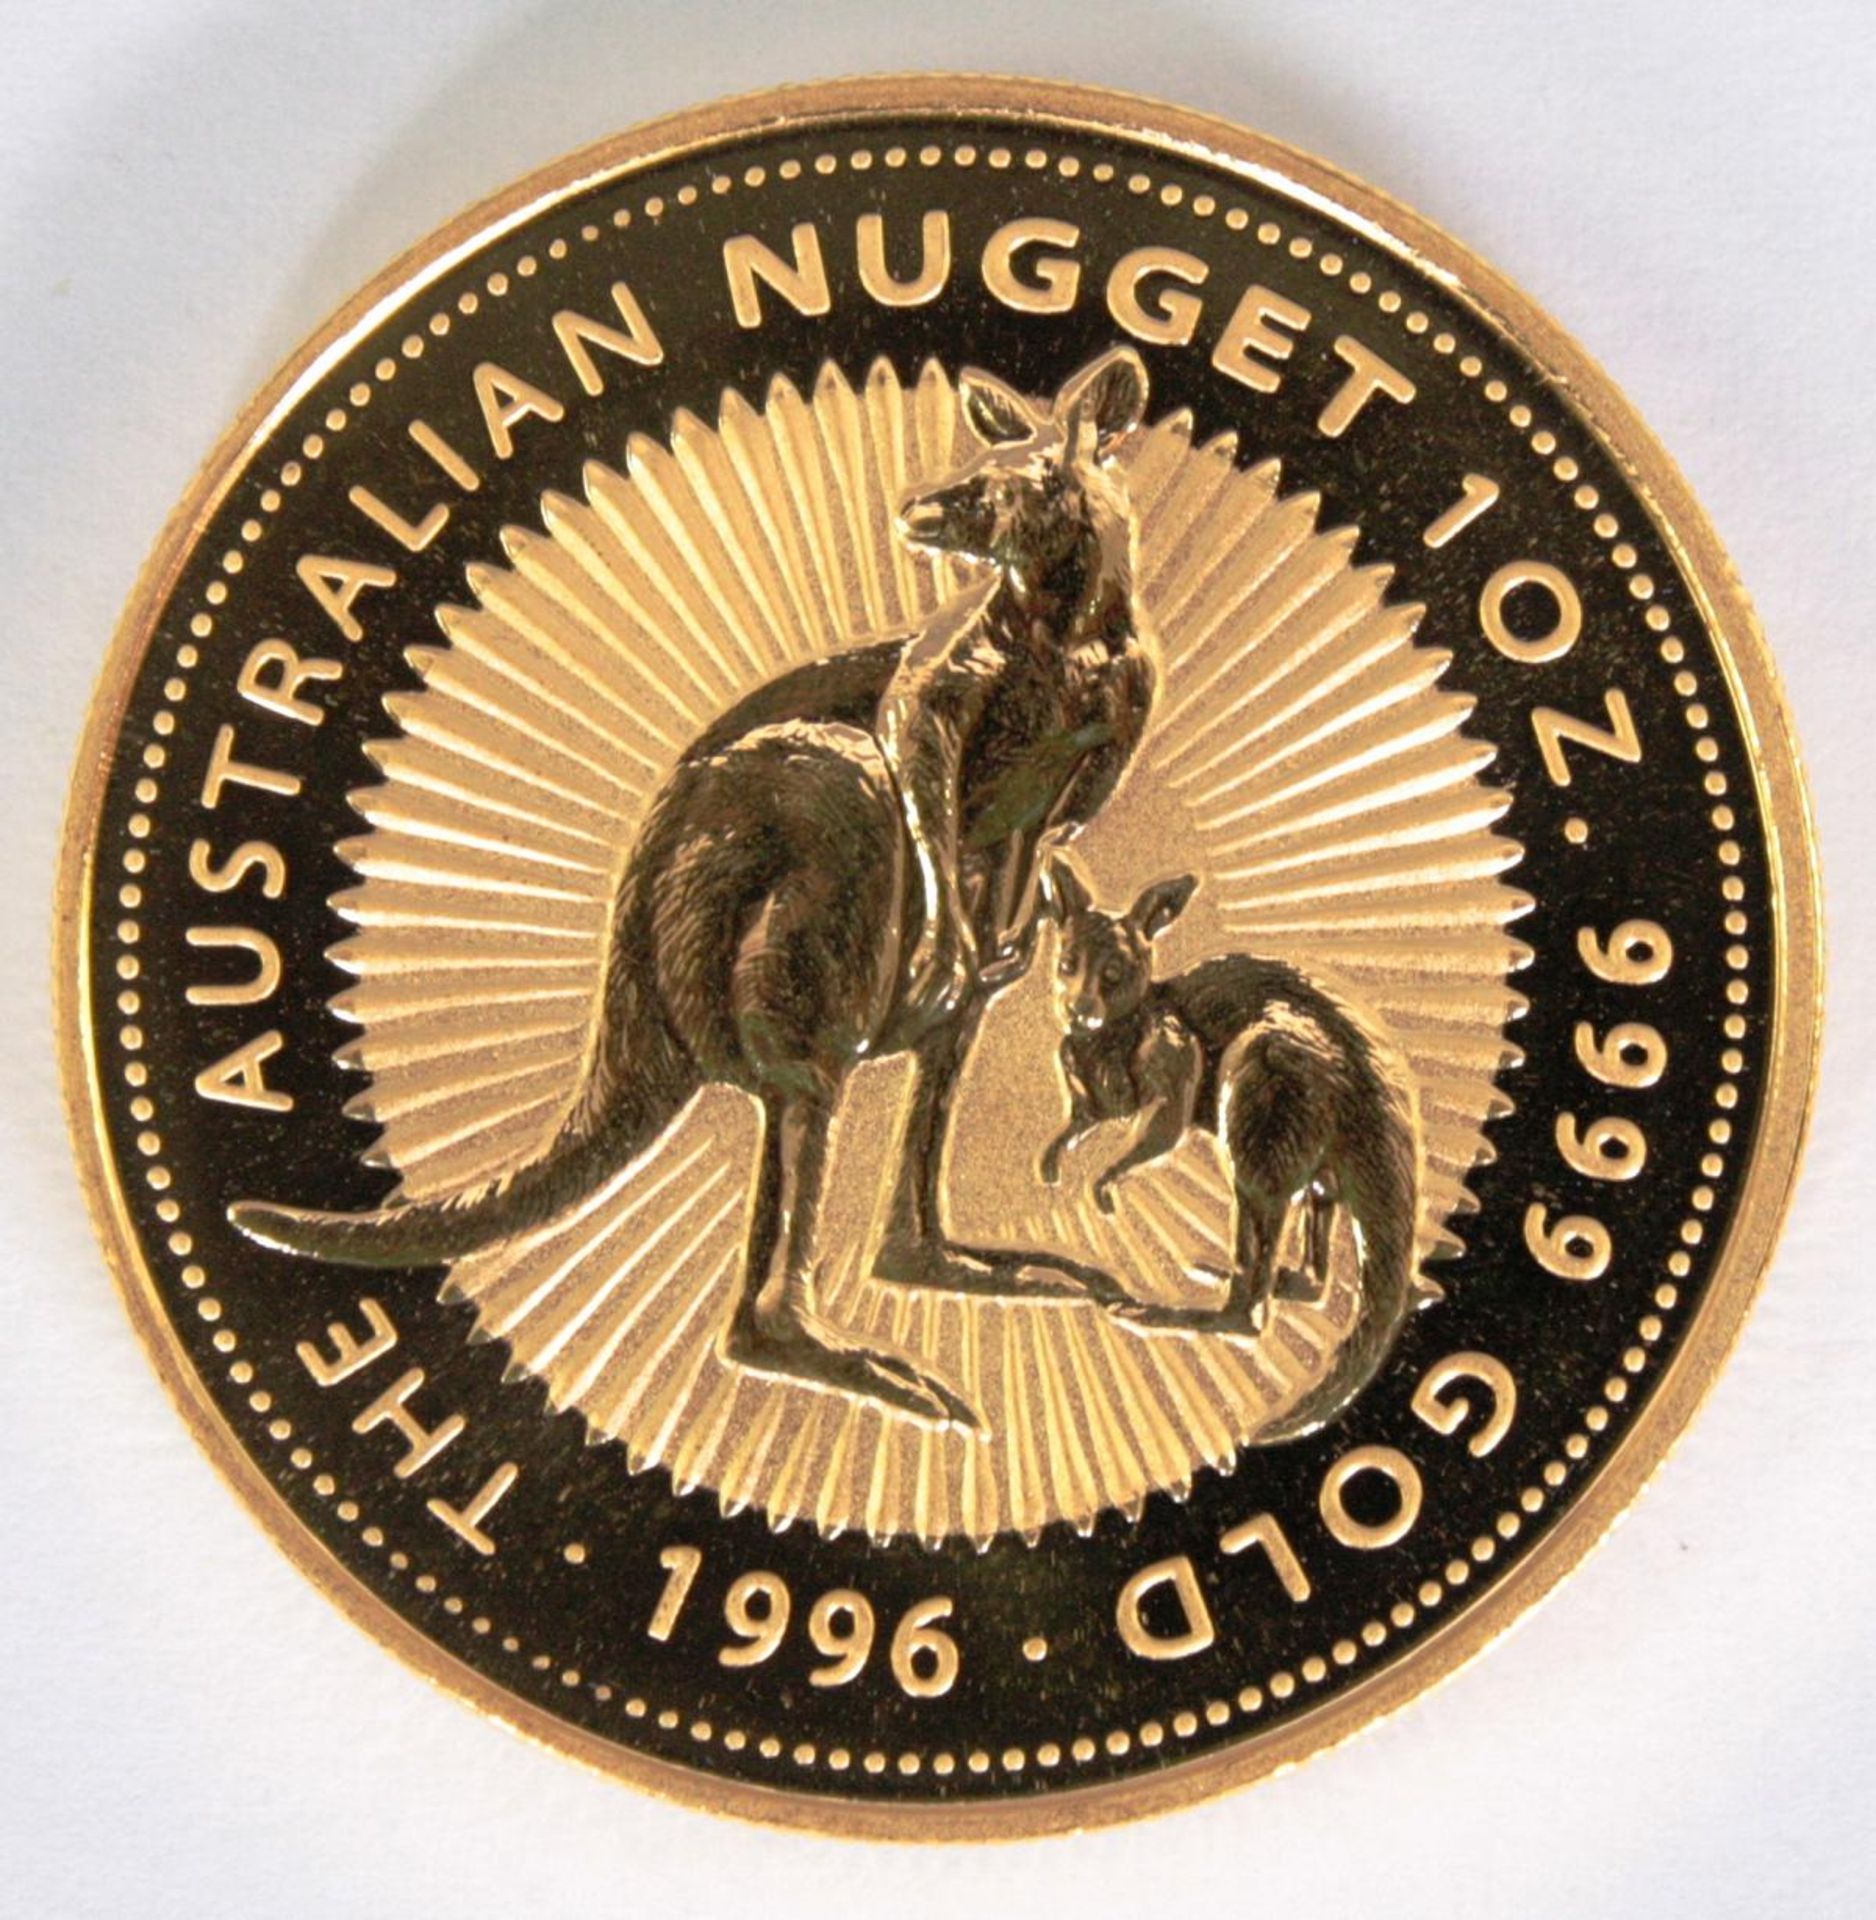 Australien, 100 Dollars, Känguru, 1 Unze Feingold - Image 2 of 2